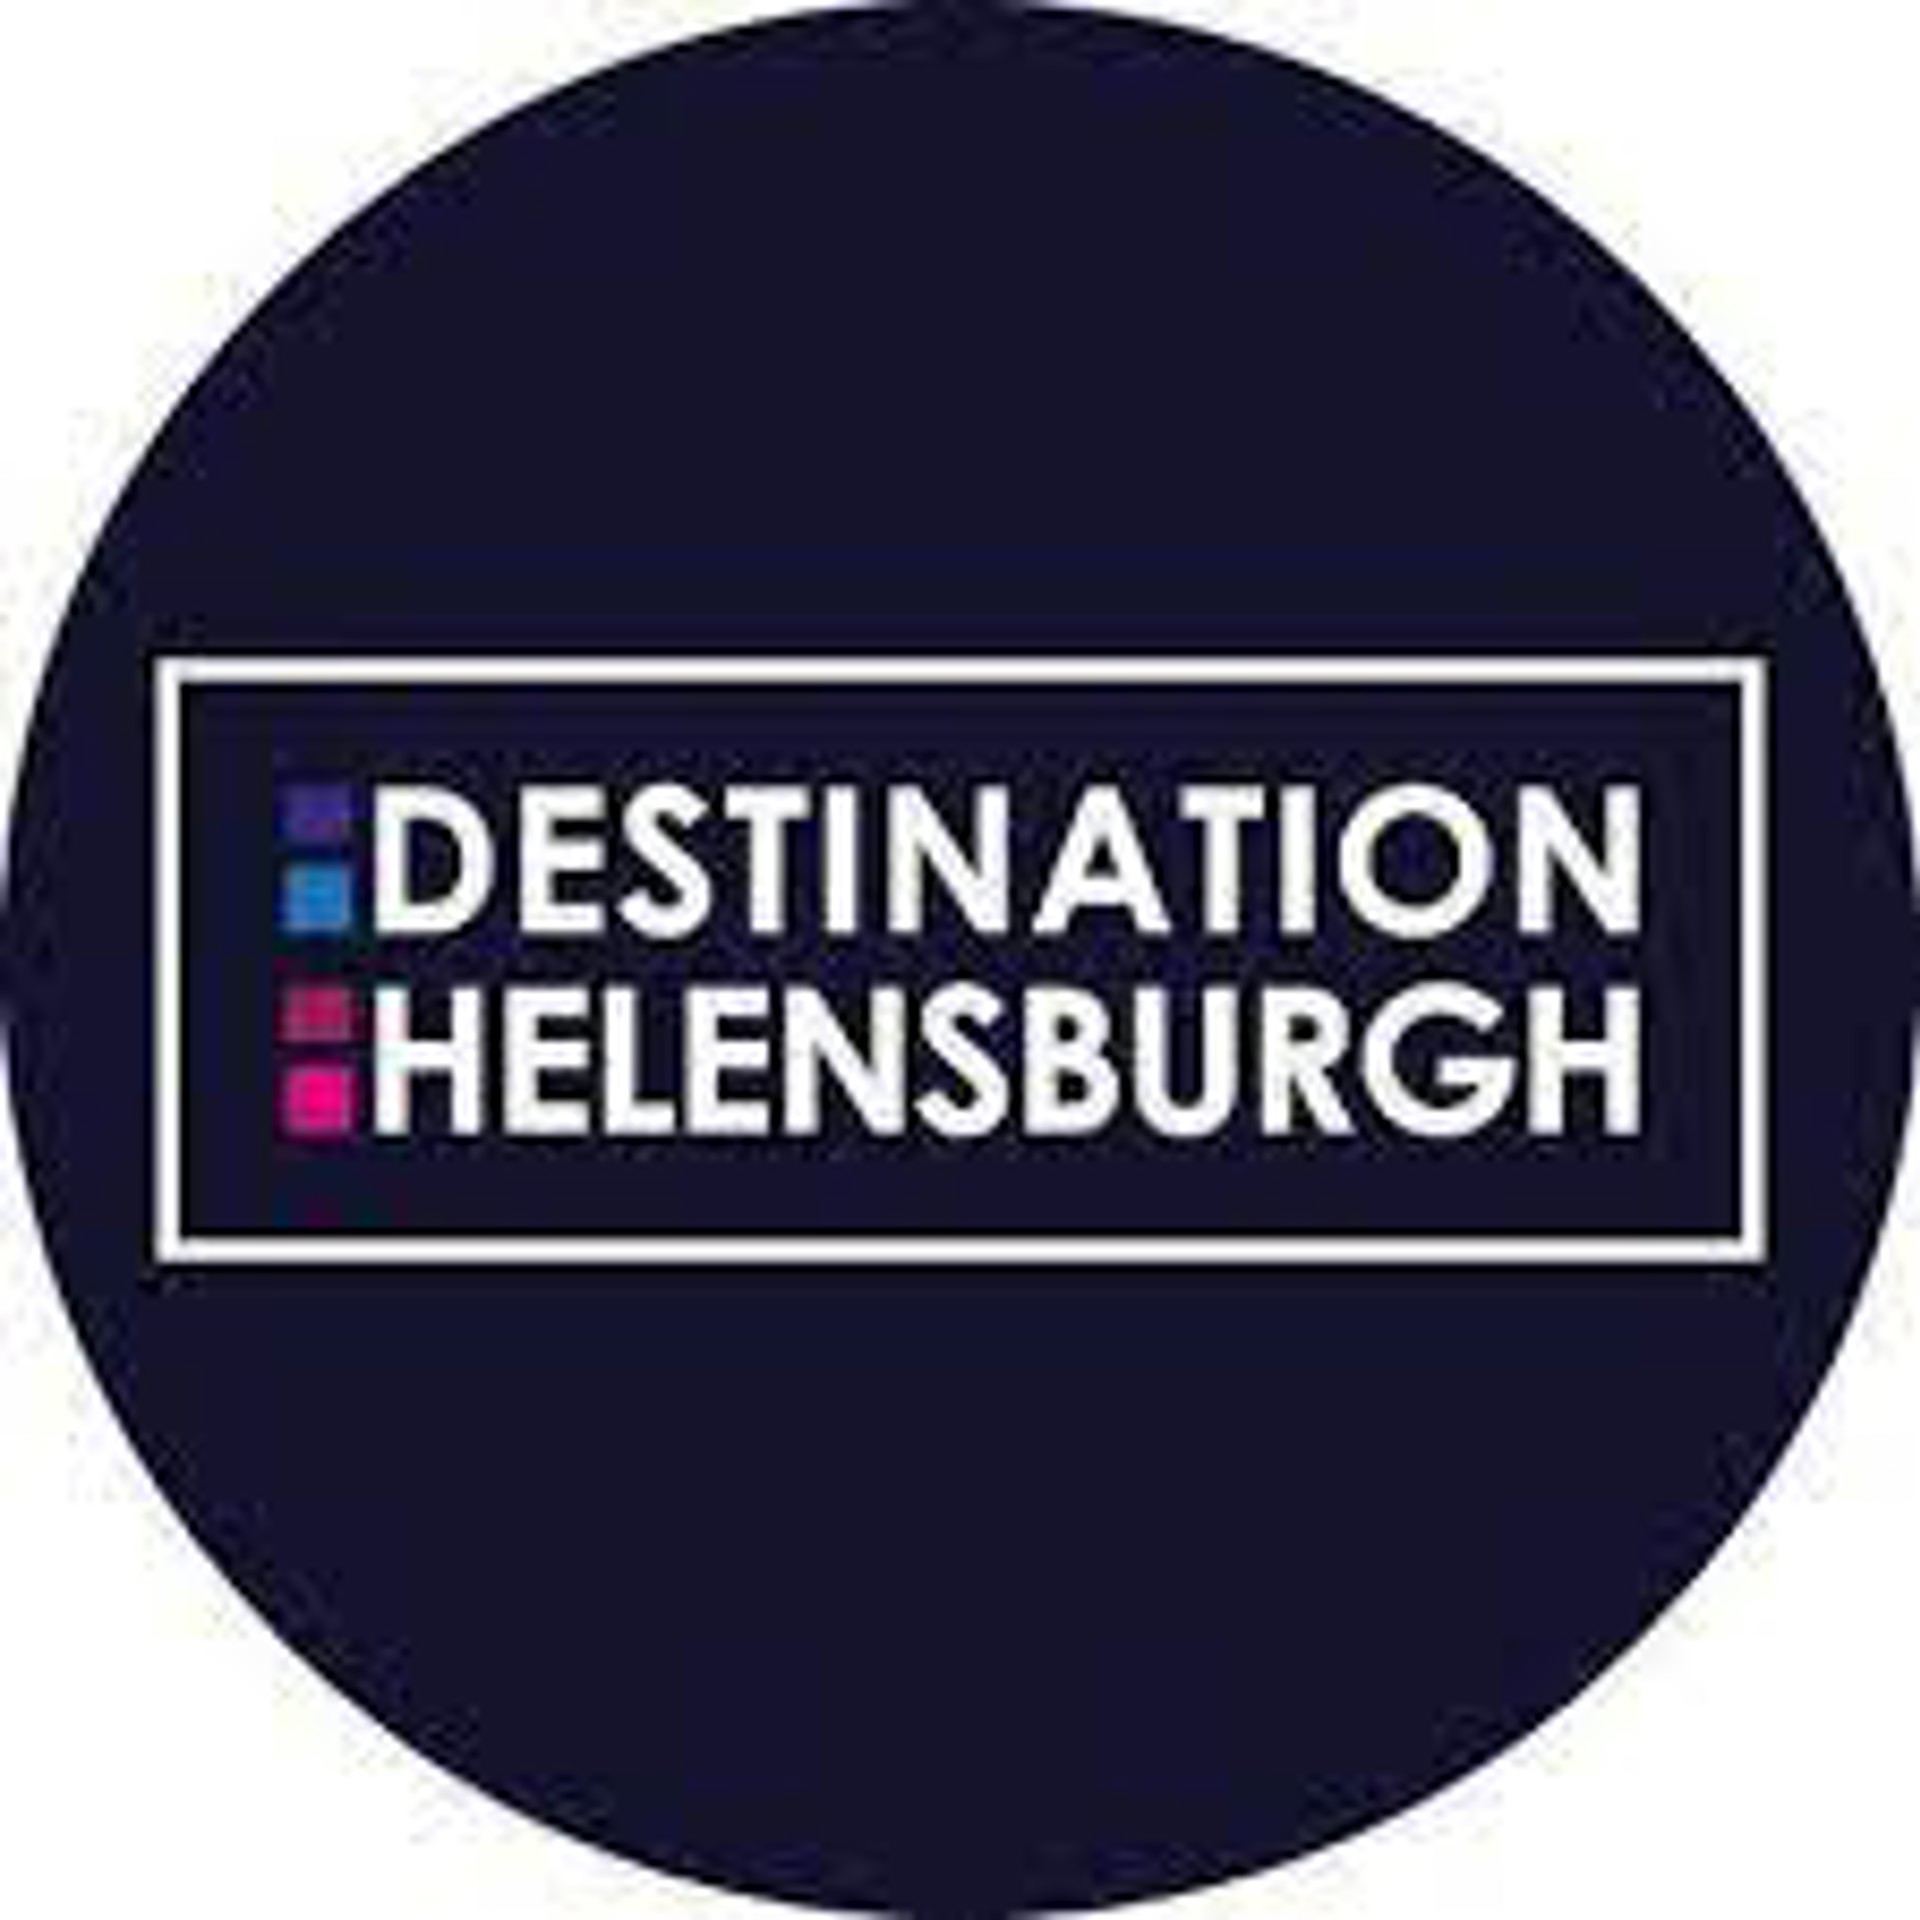 Destination Helensburgh